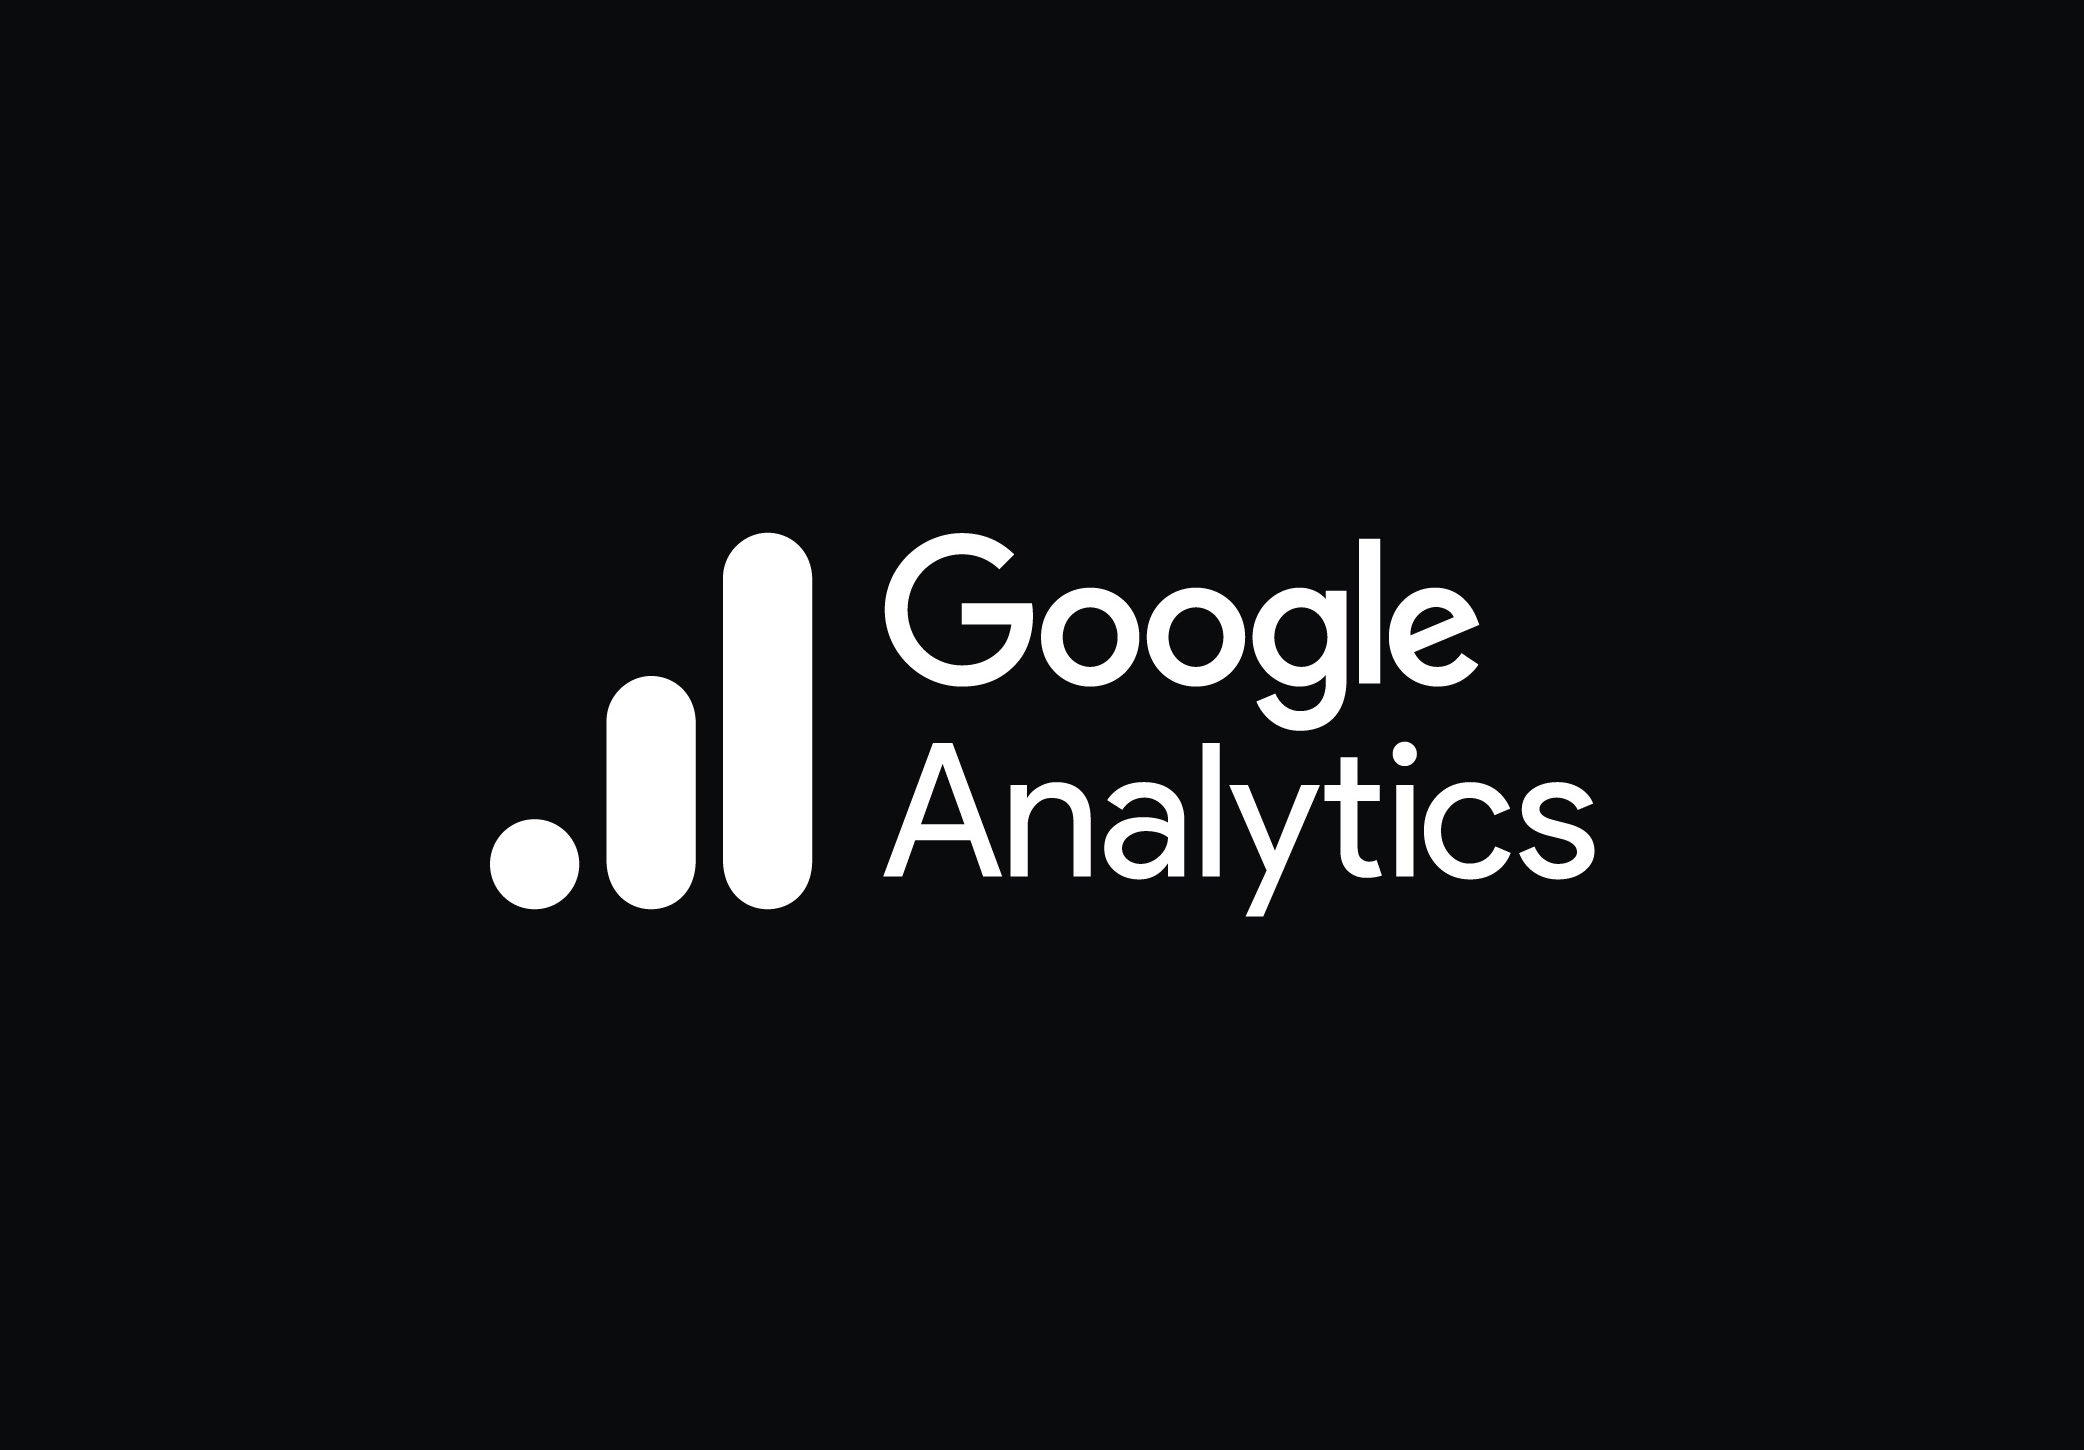 Google-Analytics-aspect-ratio-670-466